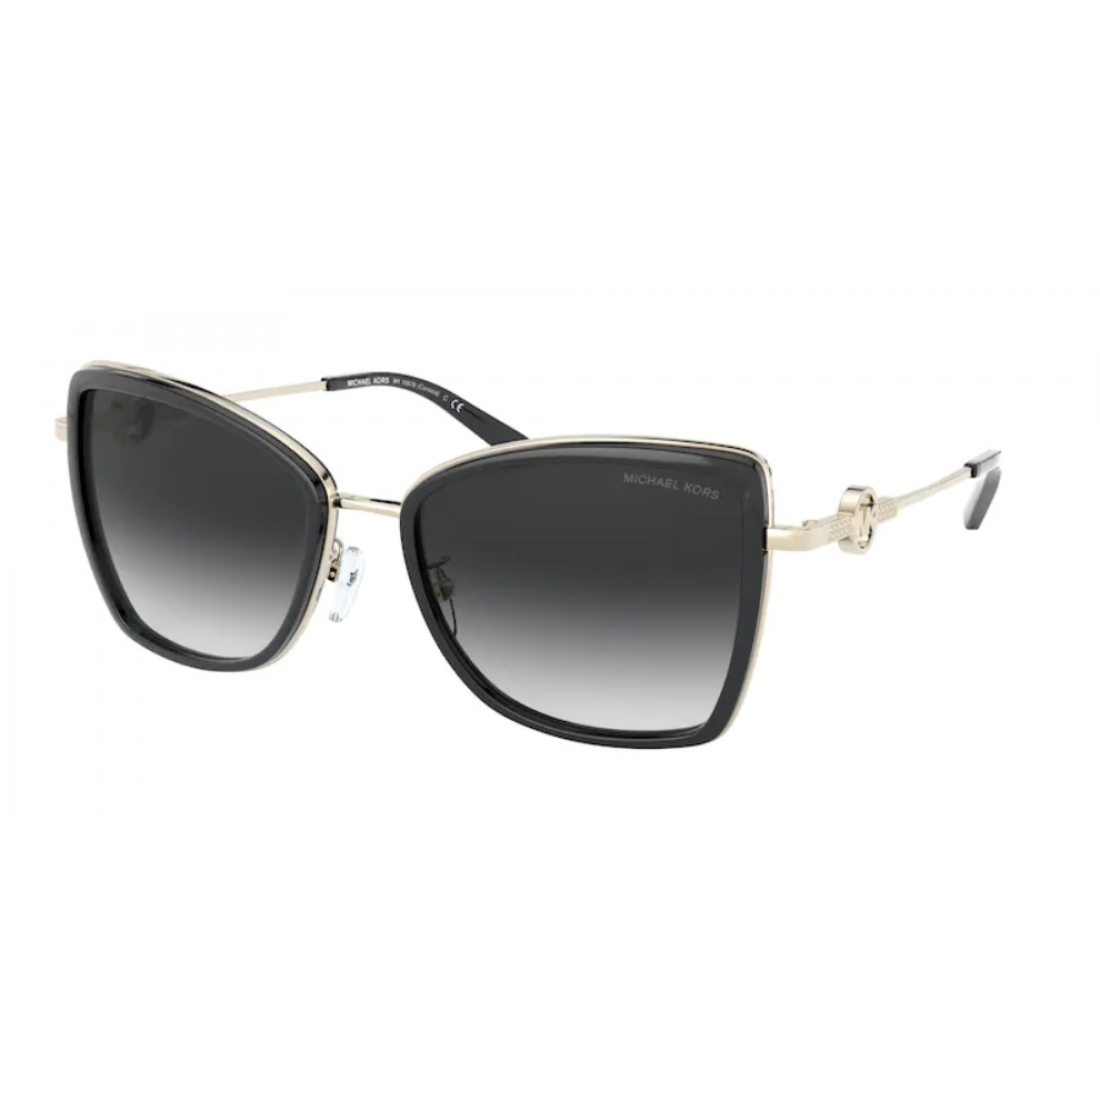 MICHAEL KORS 1067B 10148G black e gold / grey occhiali